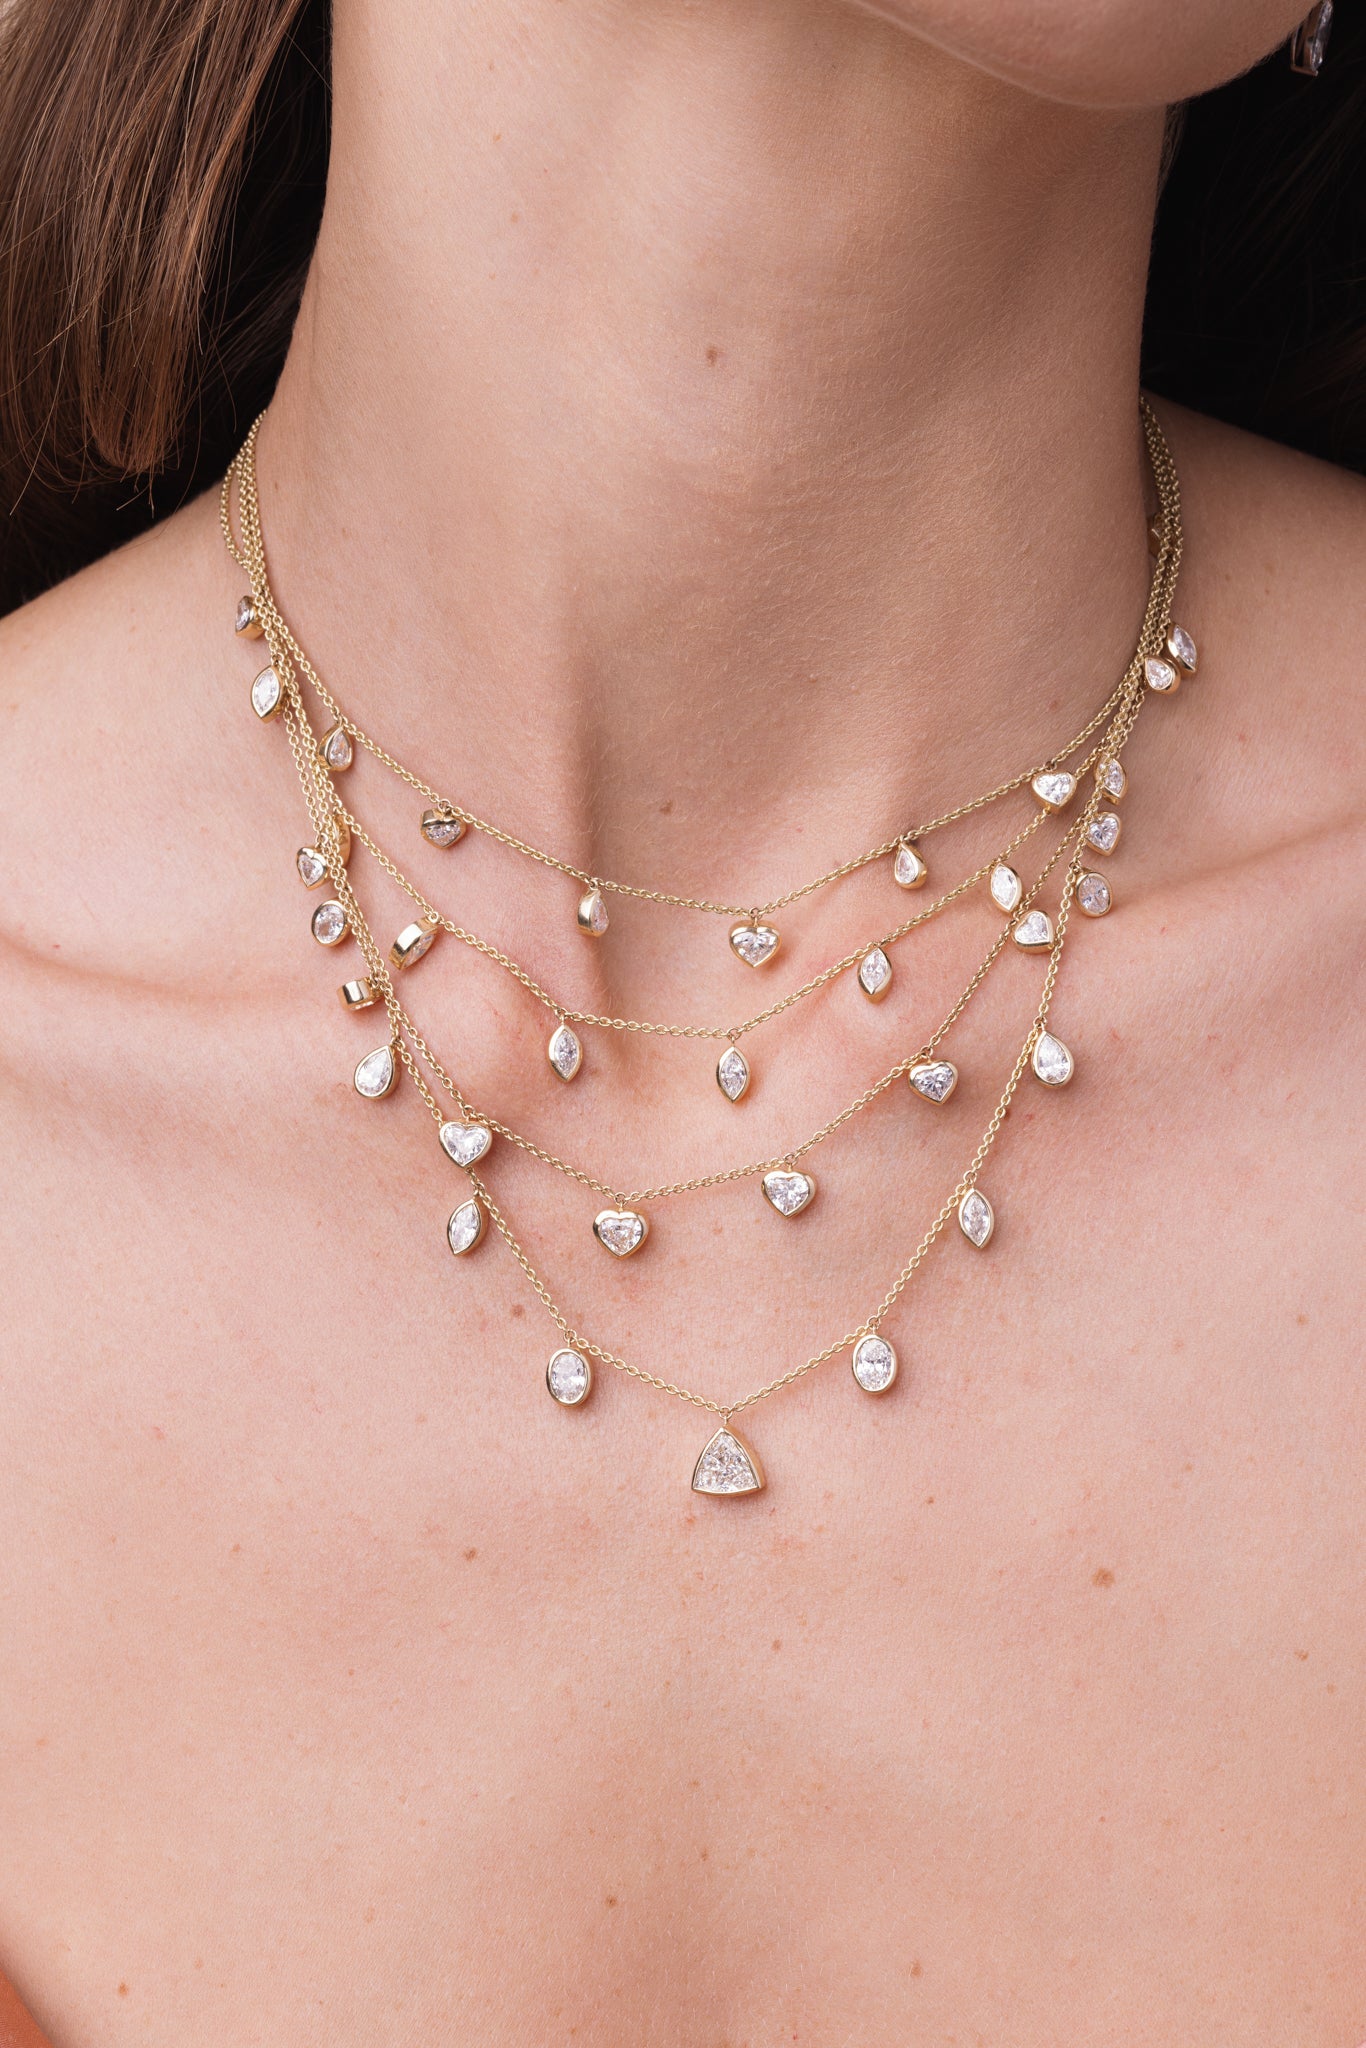 Lab Grown Diamond Necklaces